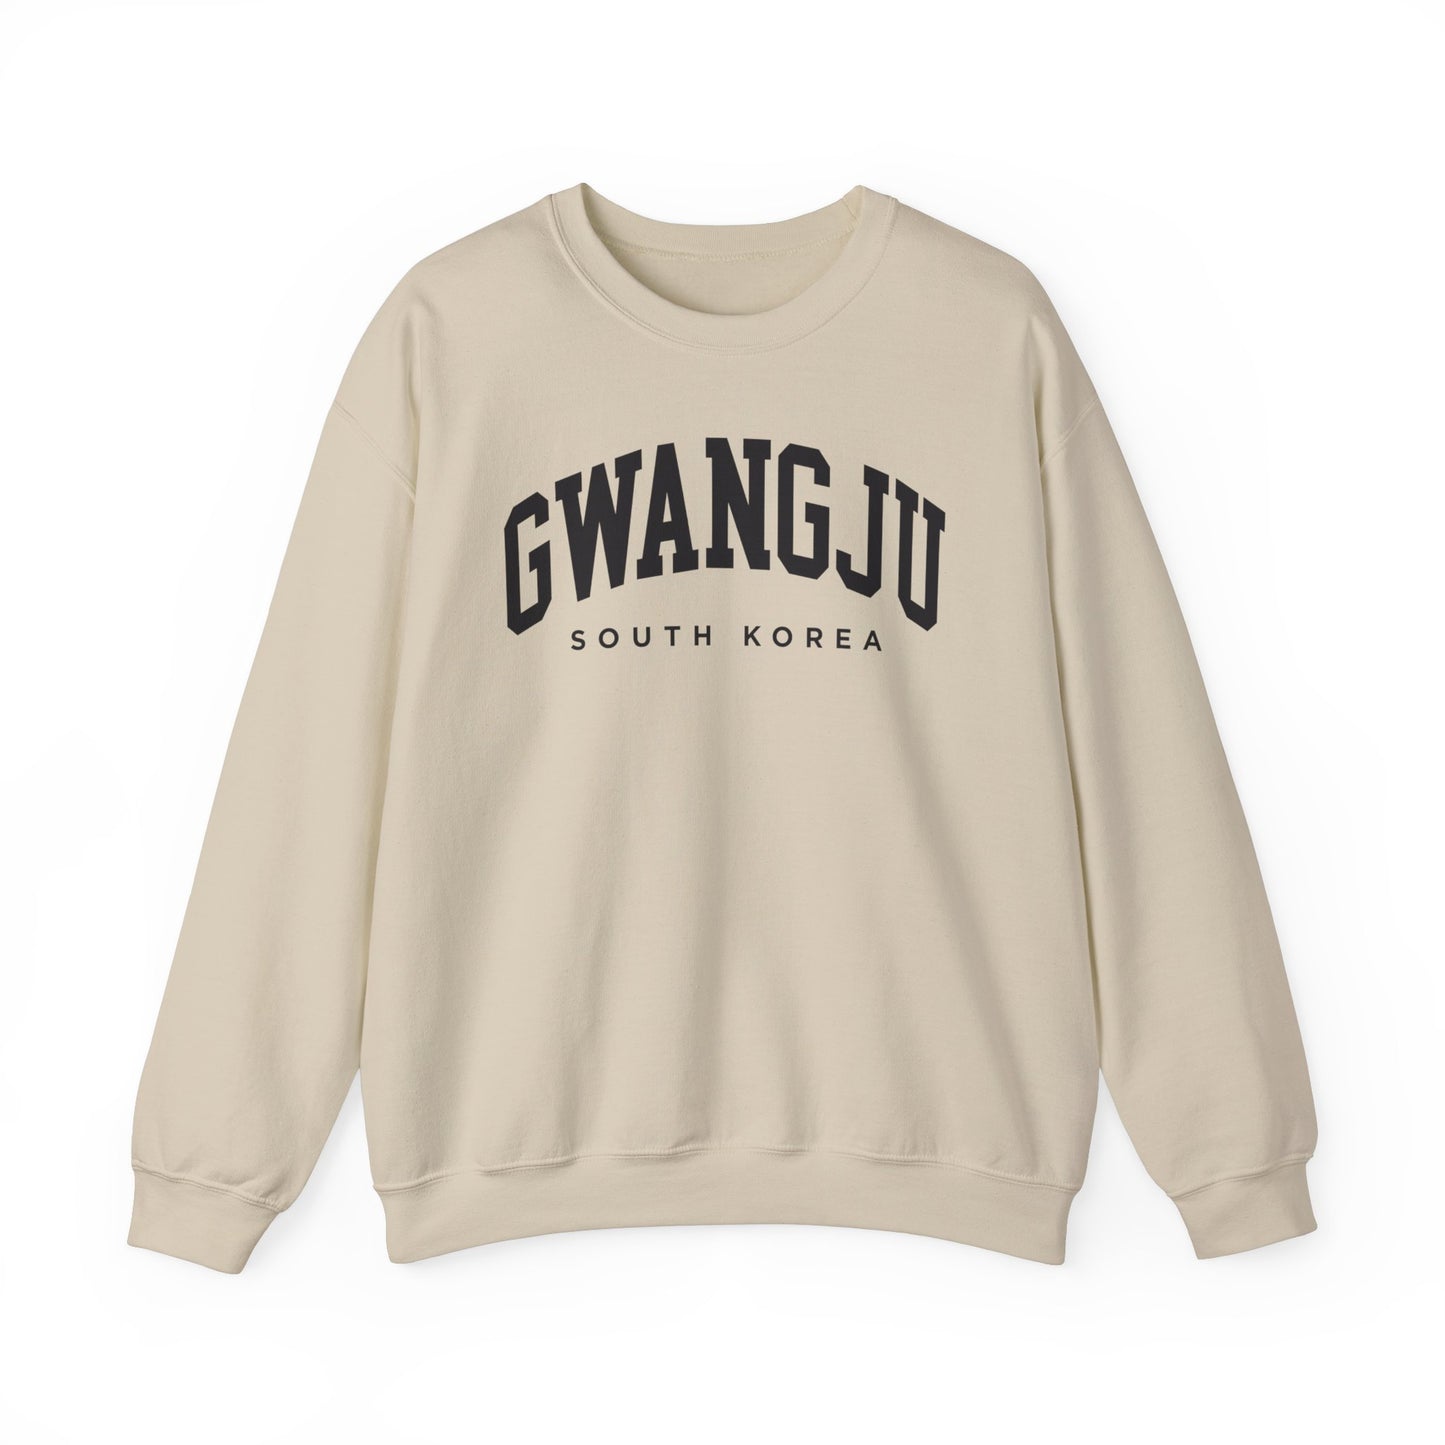 Gwangju South Korea Sweatshirt